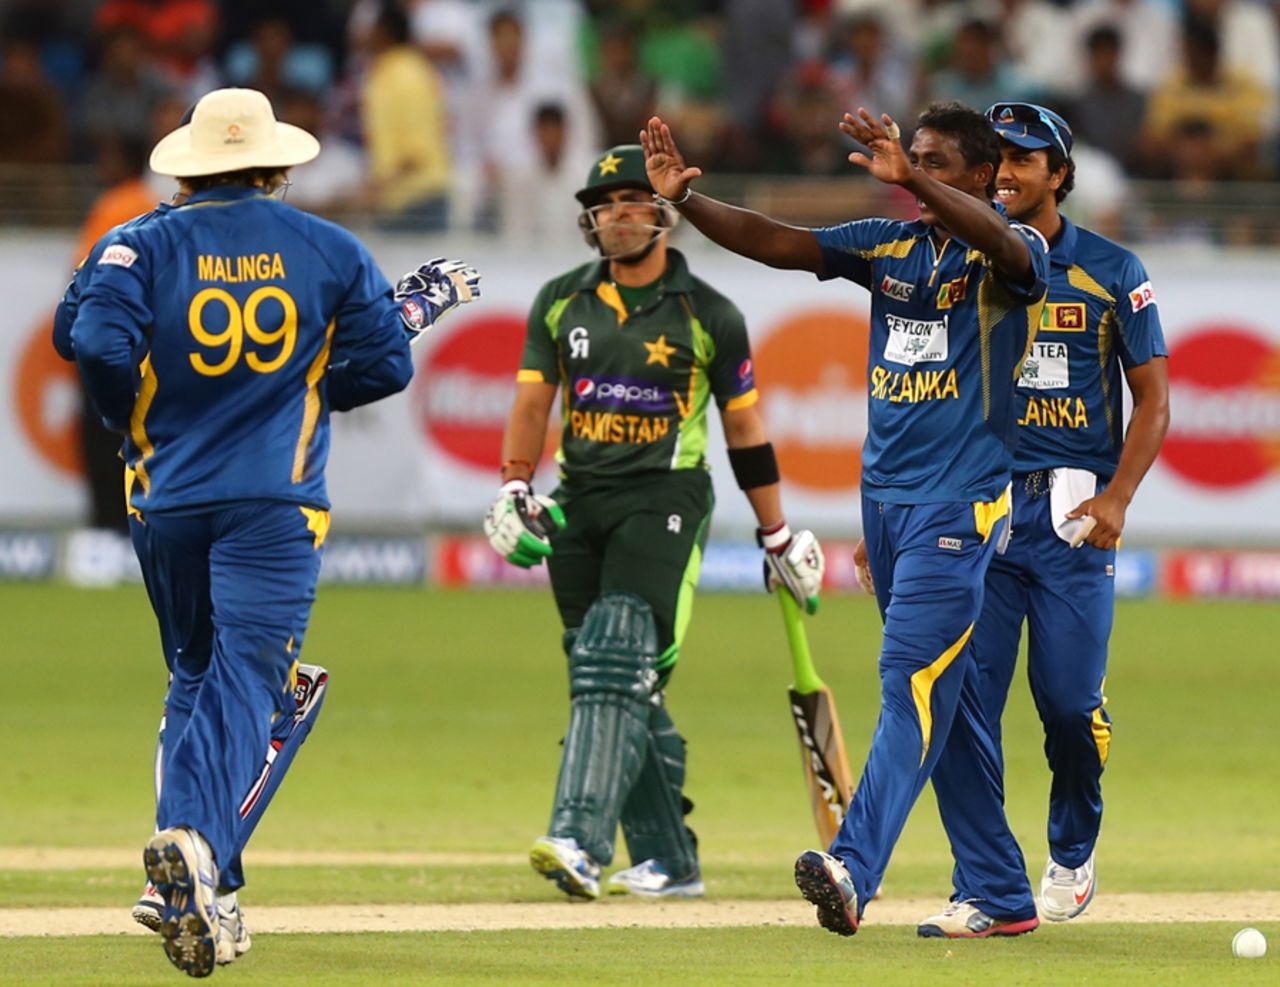 Umar Akmal was run out after taking a start by bowler Ajantha Mendis, Pakistan v Sri Lanka, 1st T20I, Dubai, December 11, 2013